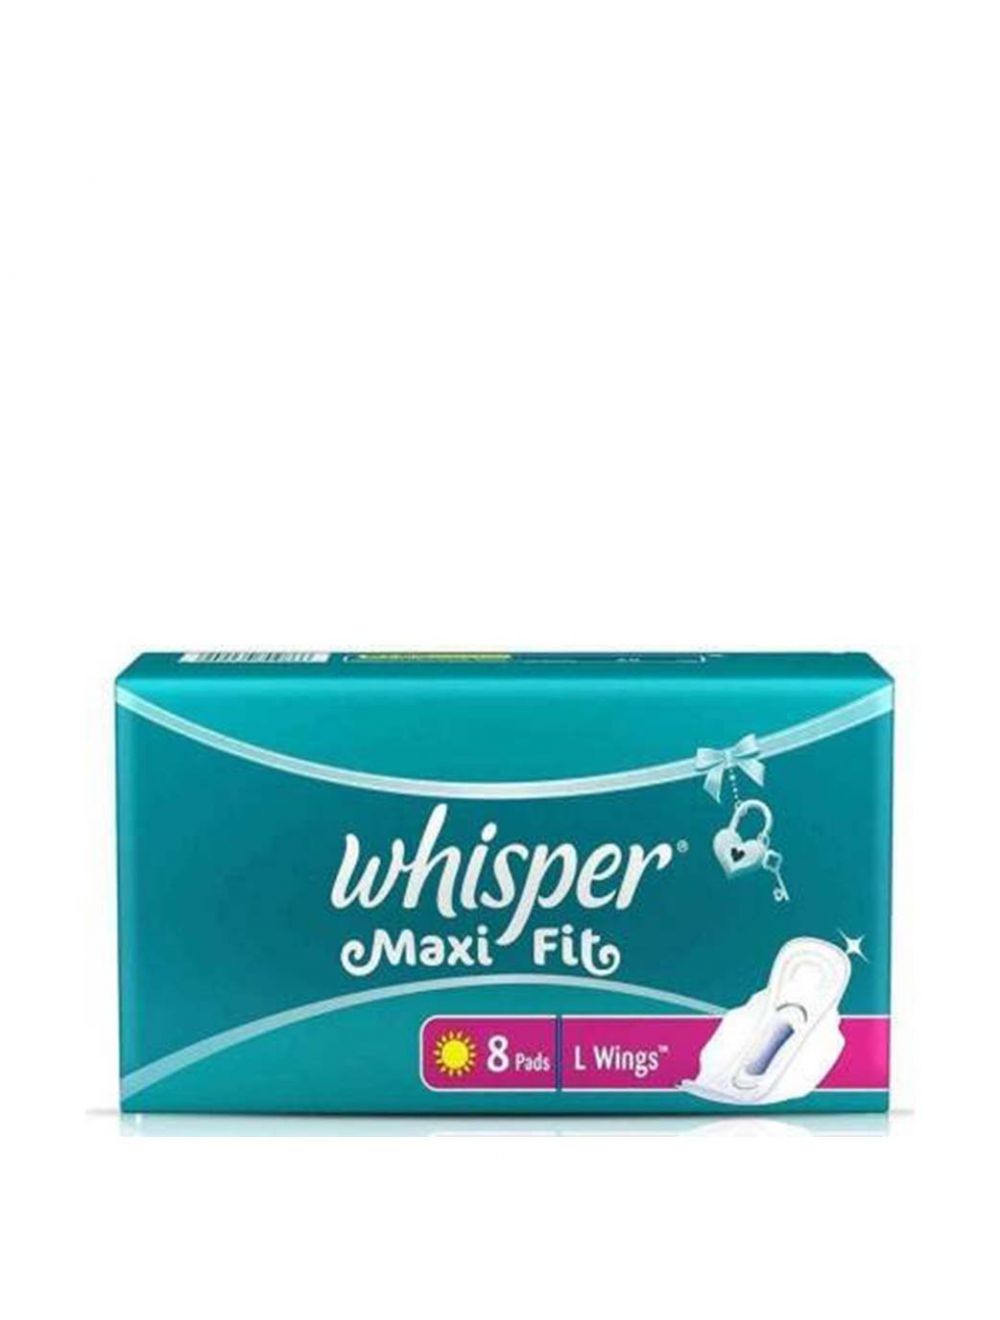 Whisper Maxi Fit L Wings (8 Pads) - Niram